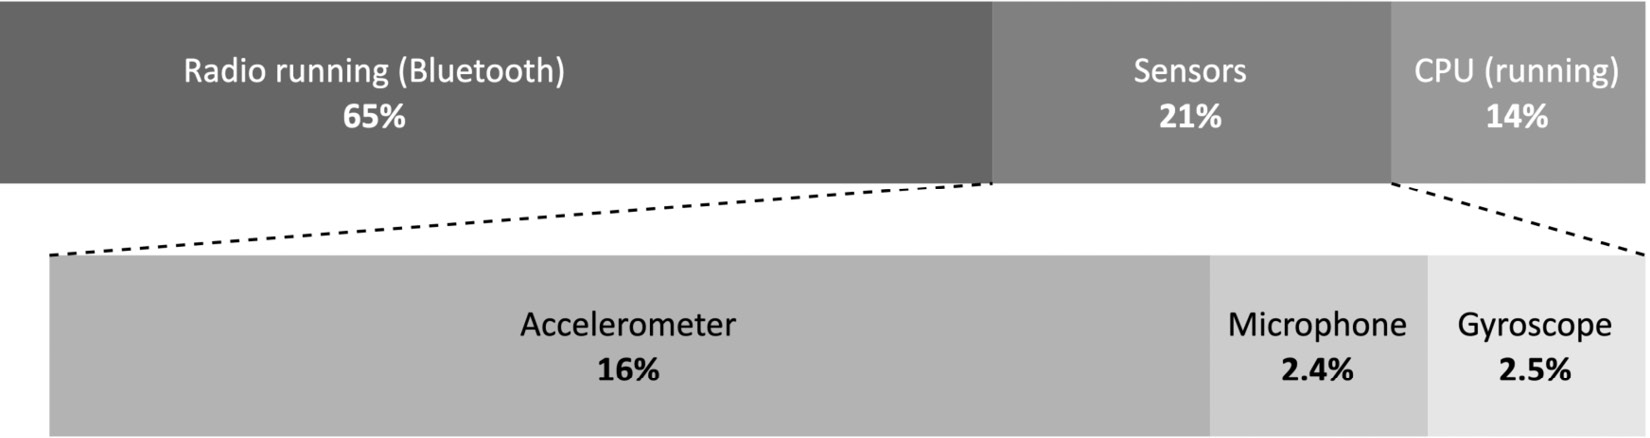 Figure 1.1 – Power consumption breakdown for the Arduino Nano 33 BLE Sense board 
